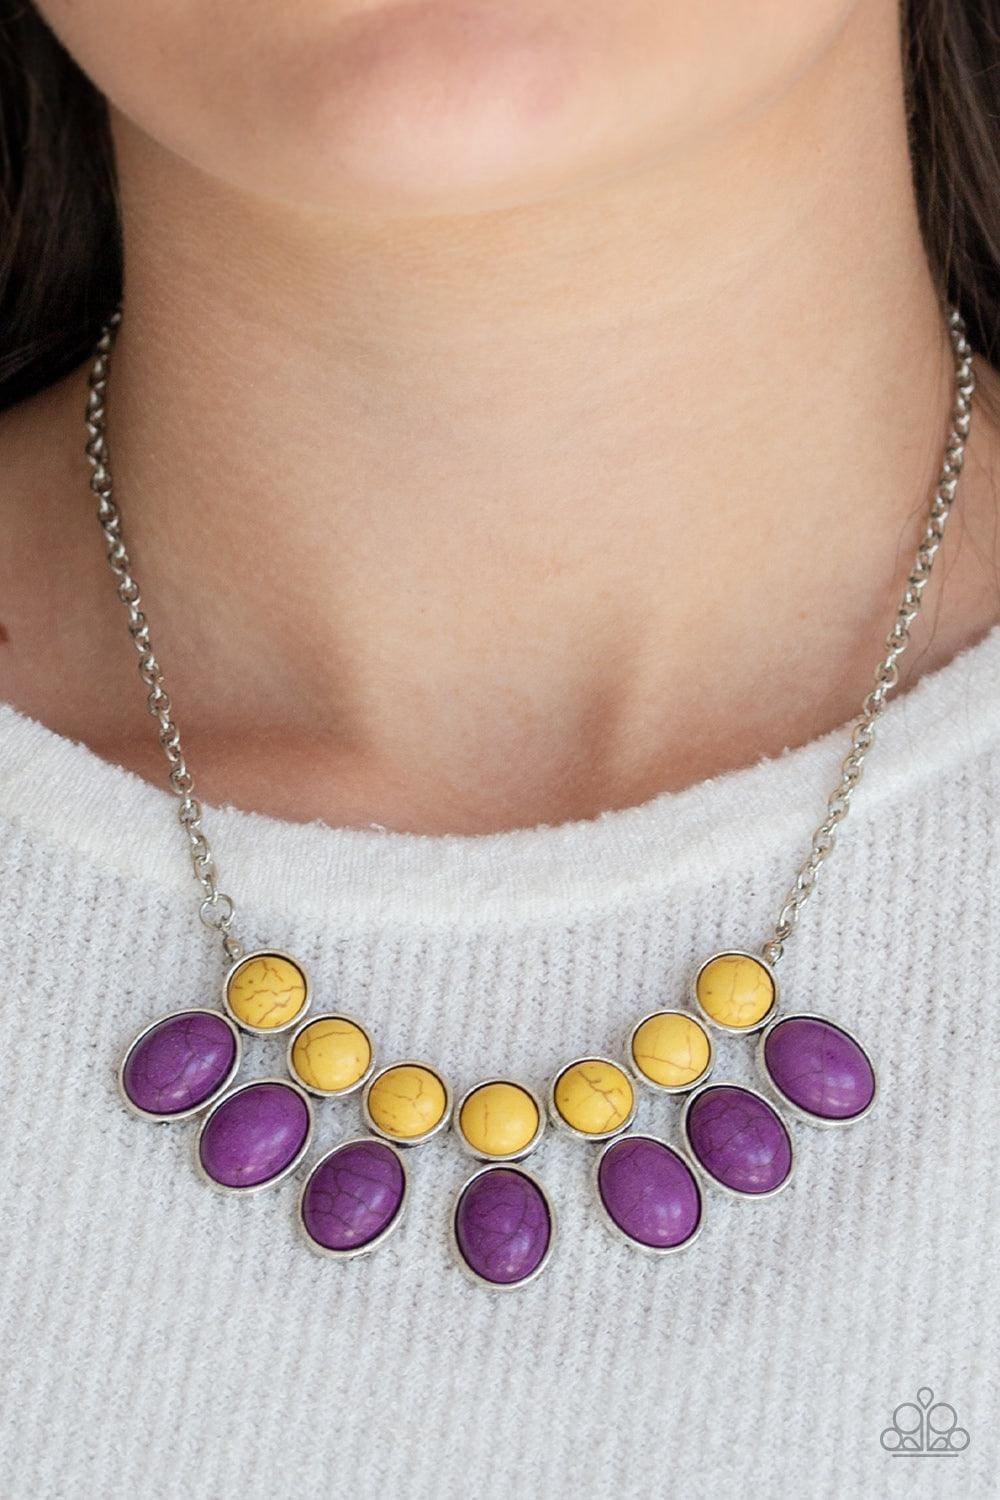 Paparazzi Accessories - Environmental Impact - Purple Necklace - Bling by JessieK